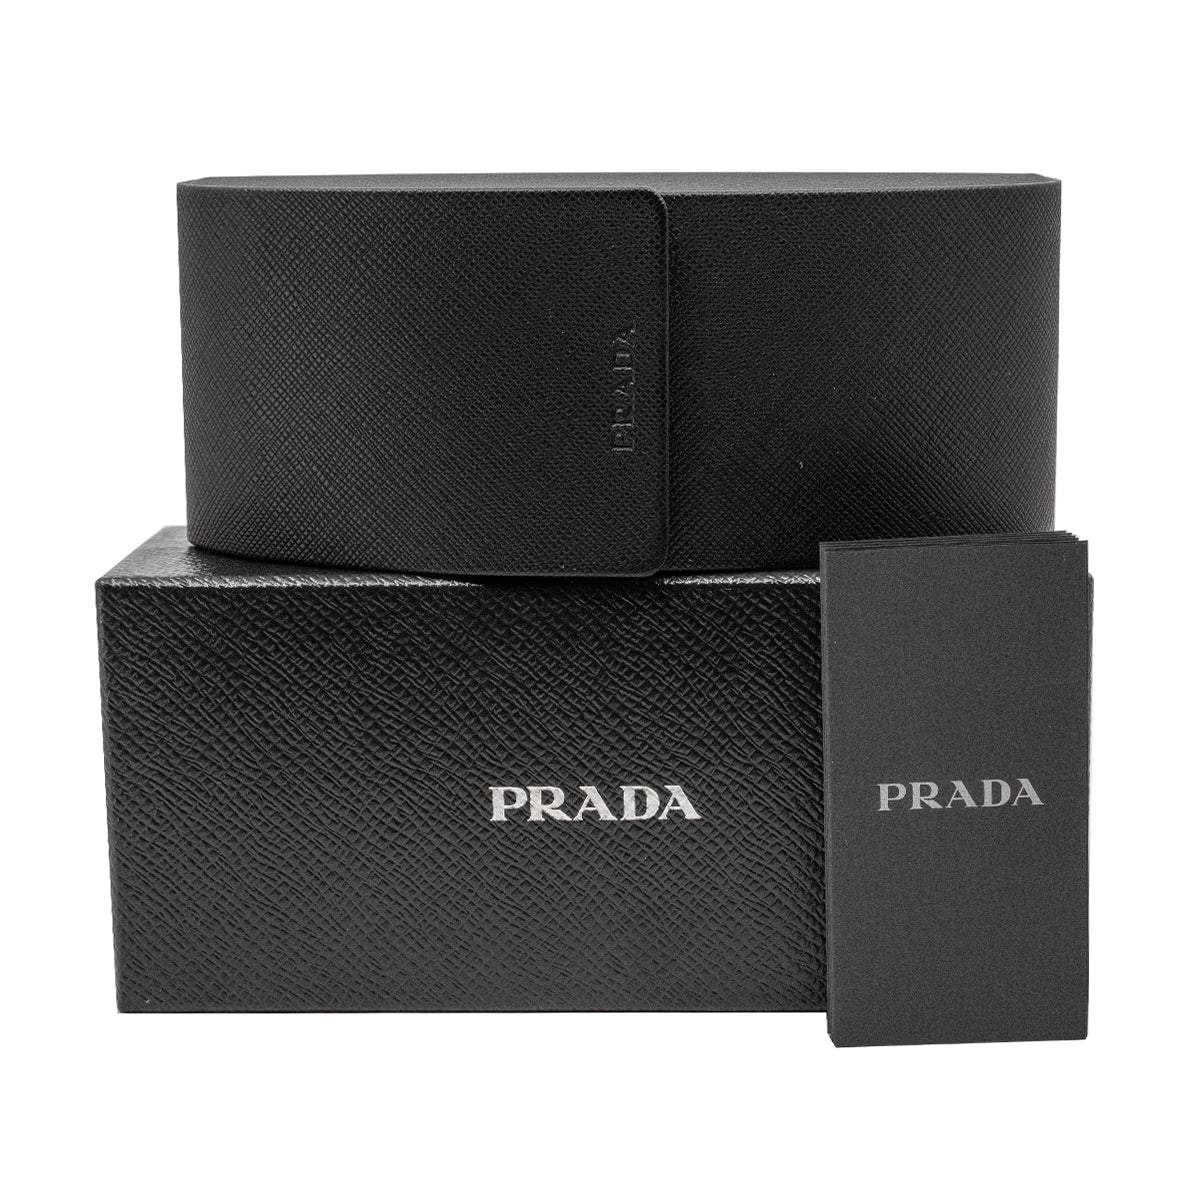 Prada Sunglasses for sale in Pretoria, South Africa | Facebook Marketplace  | Facebook